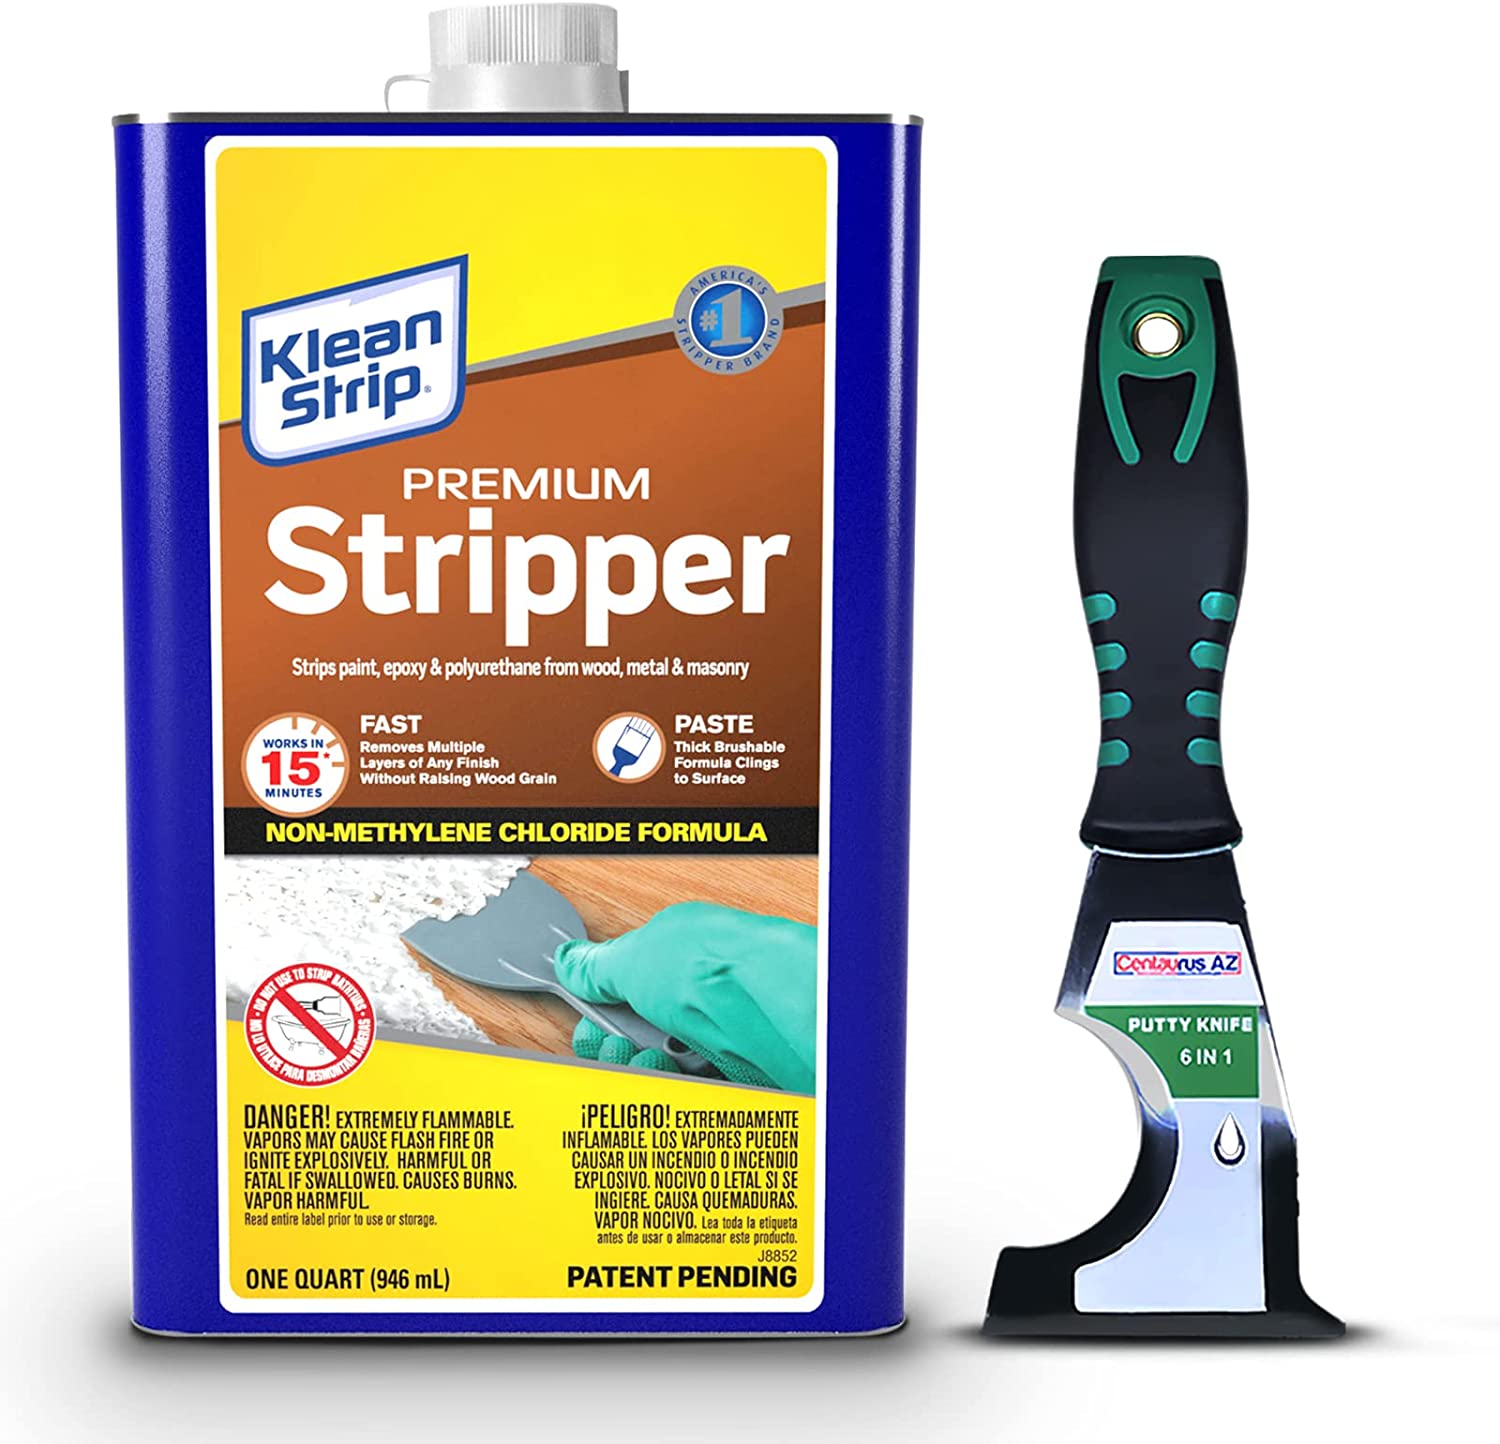 Klean Strip Premium Stripper Epoxy Polyurethane varnish and Paint remover For Wood